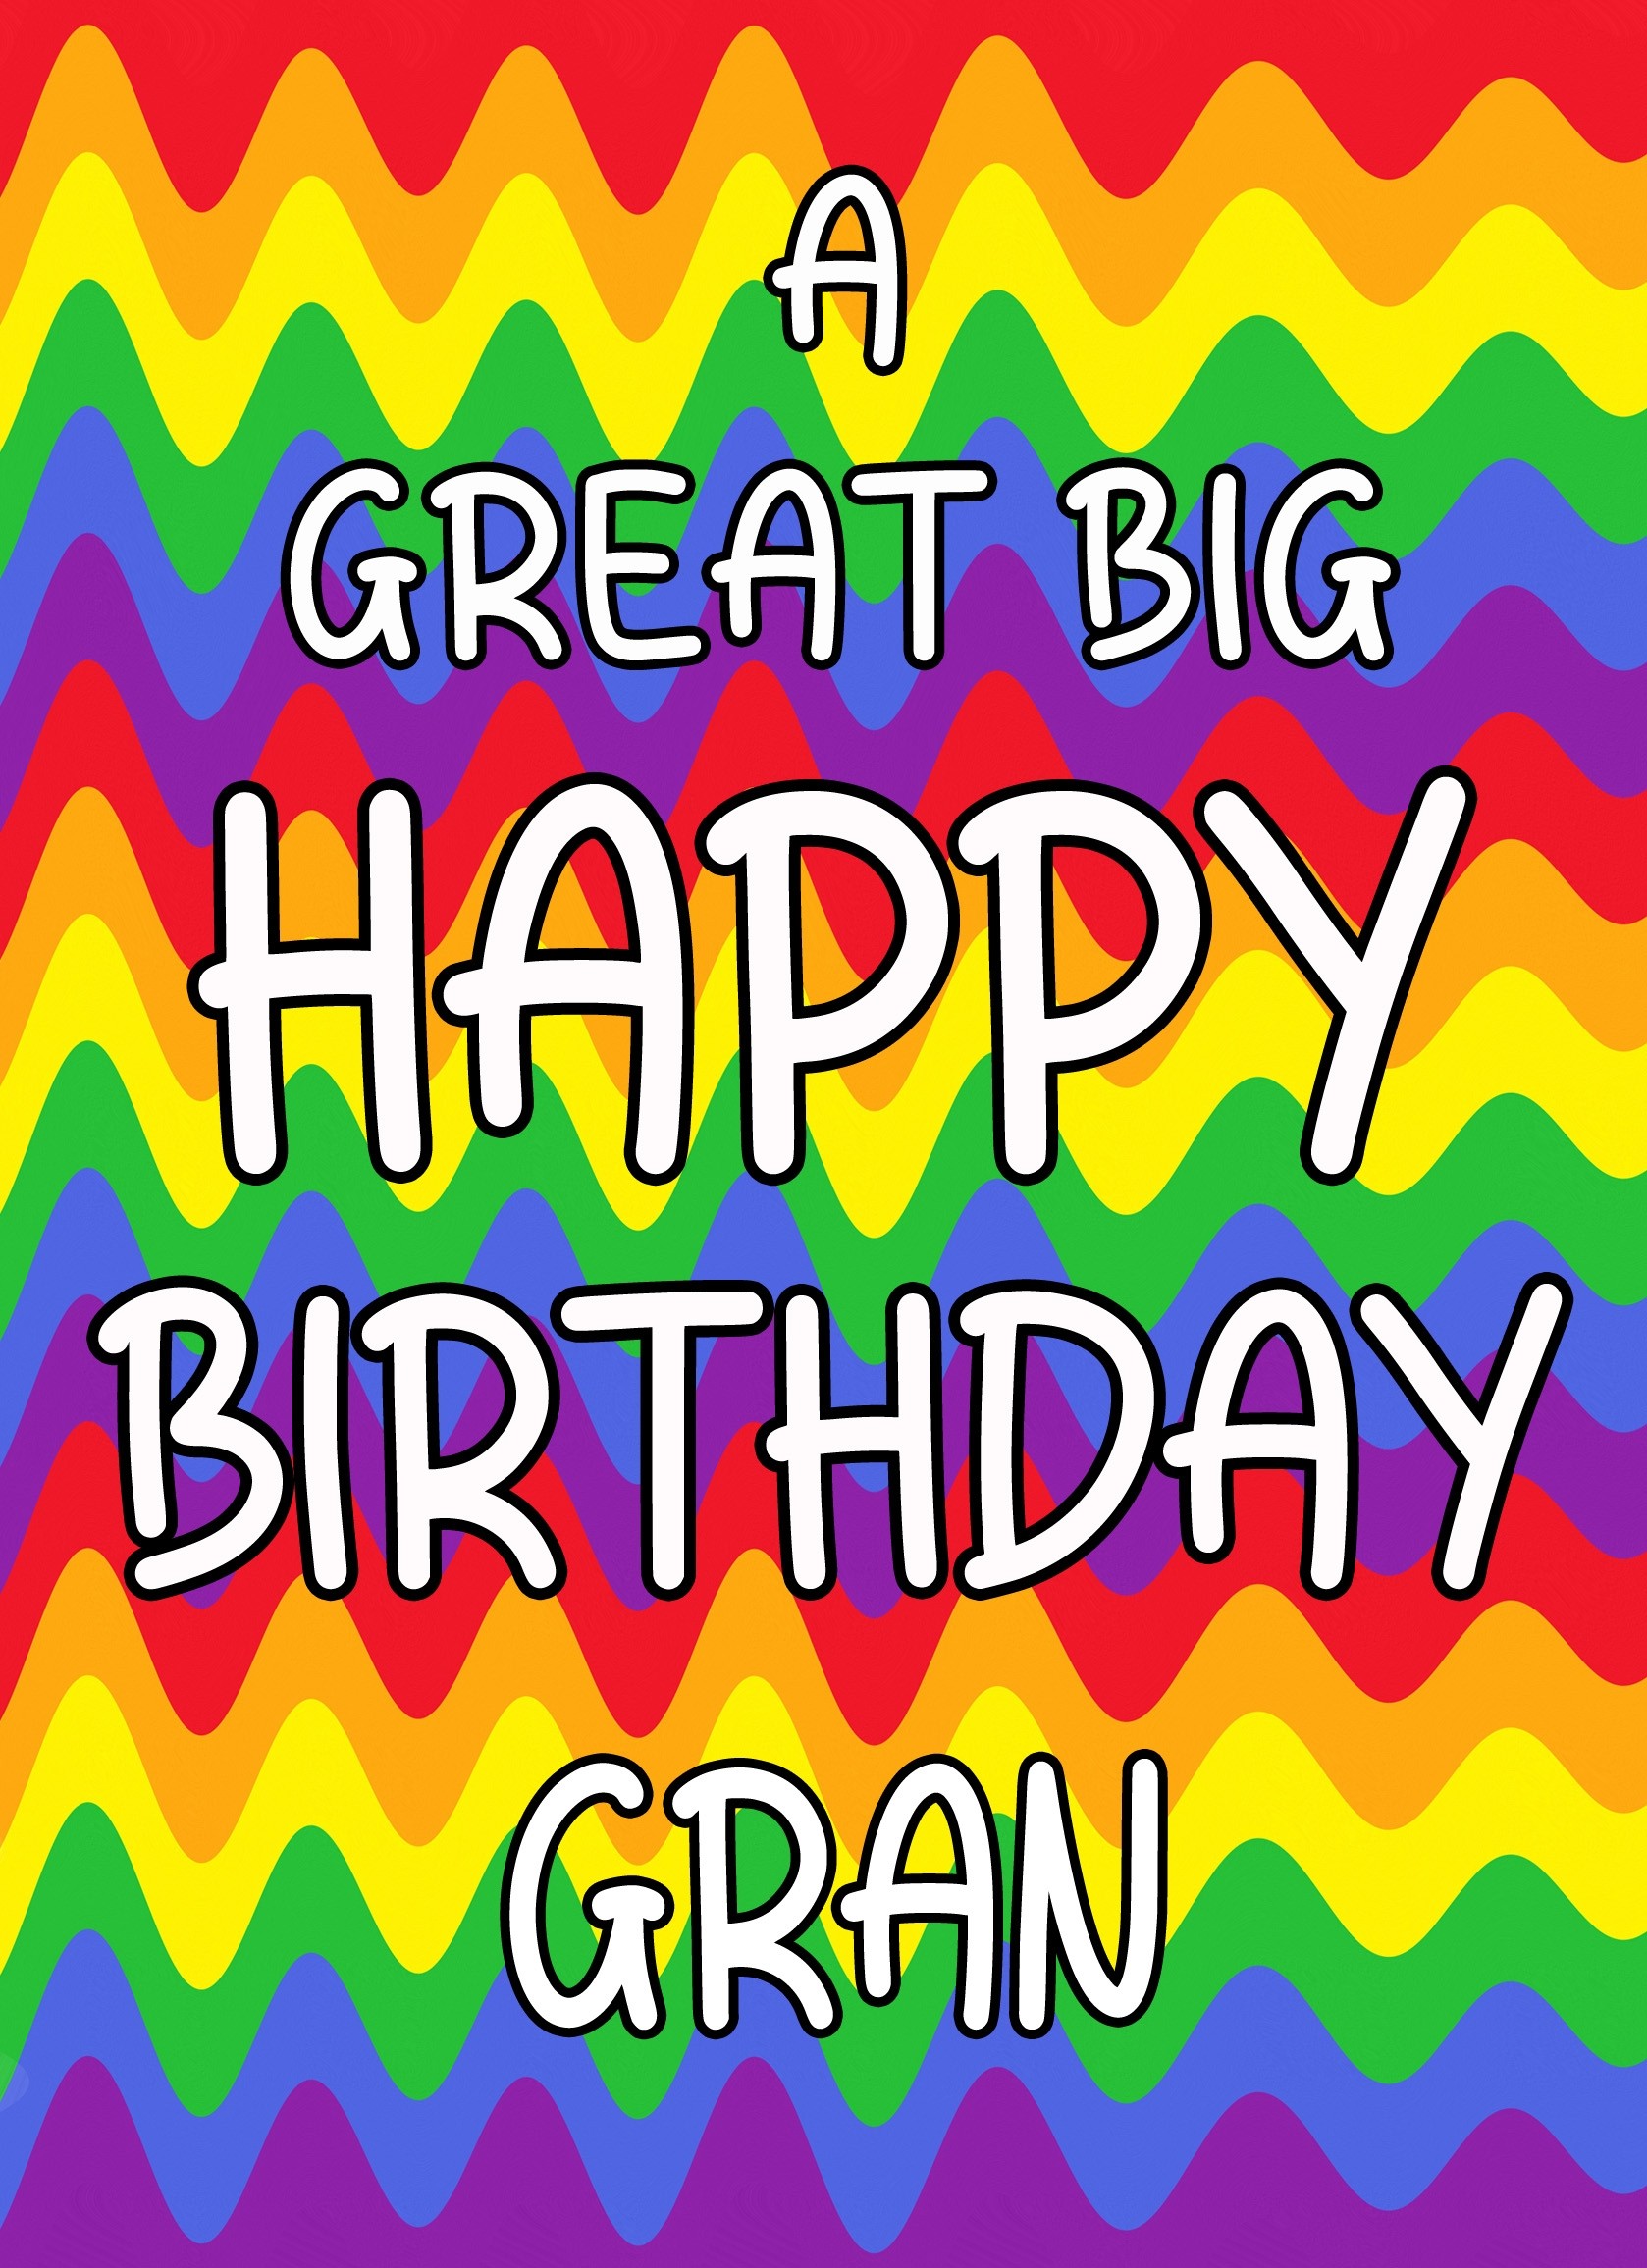 Happy Birthday 'Gran' Greeting Card (Rainbow)